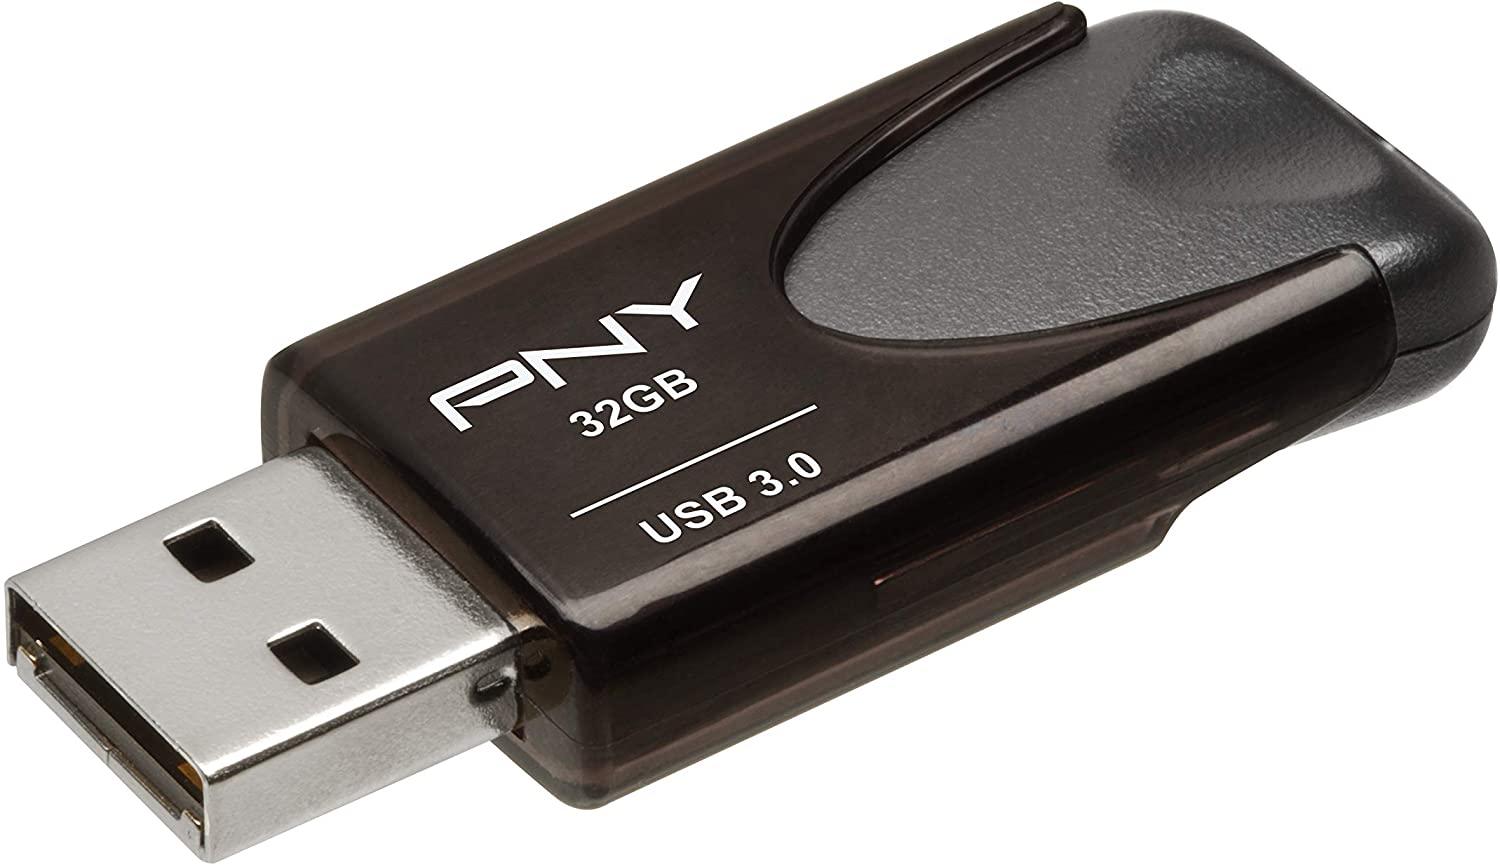 32GB PNY Turbo Attache 4 USB 3.0 Flash Drive for $4.99